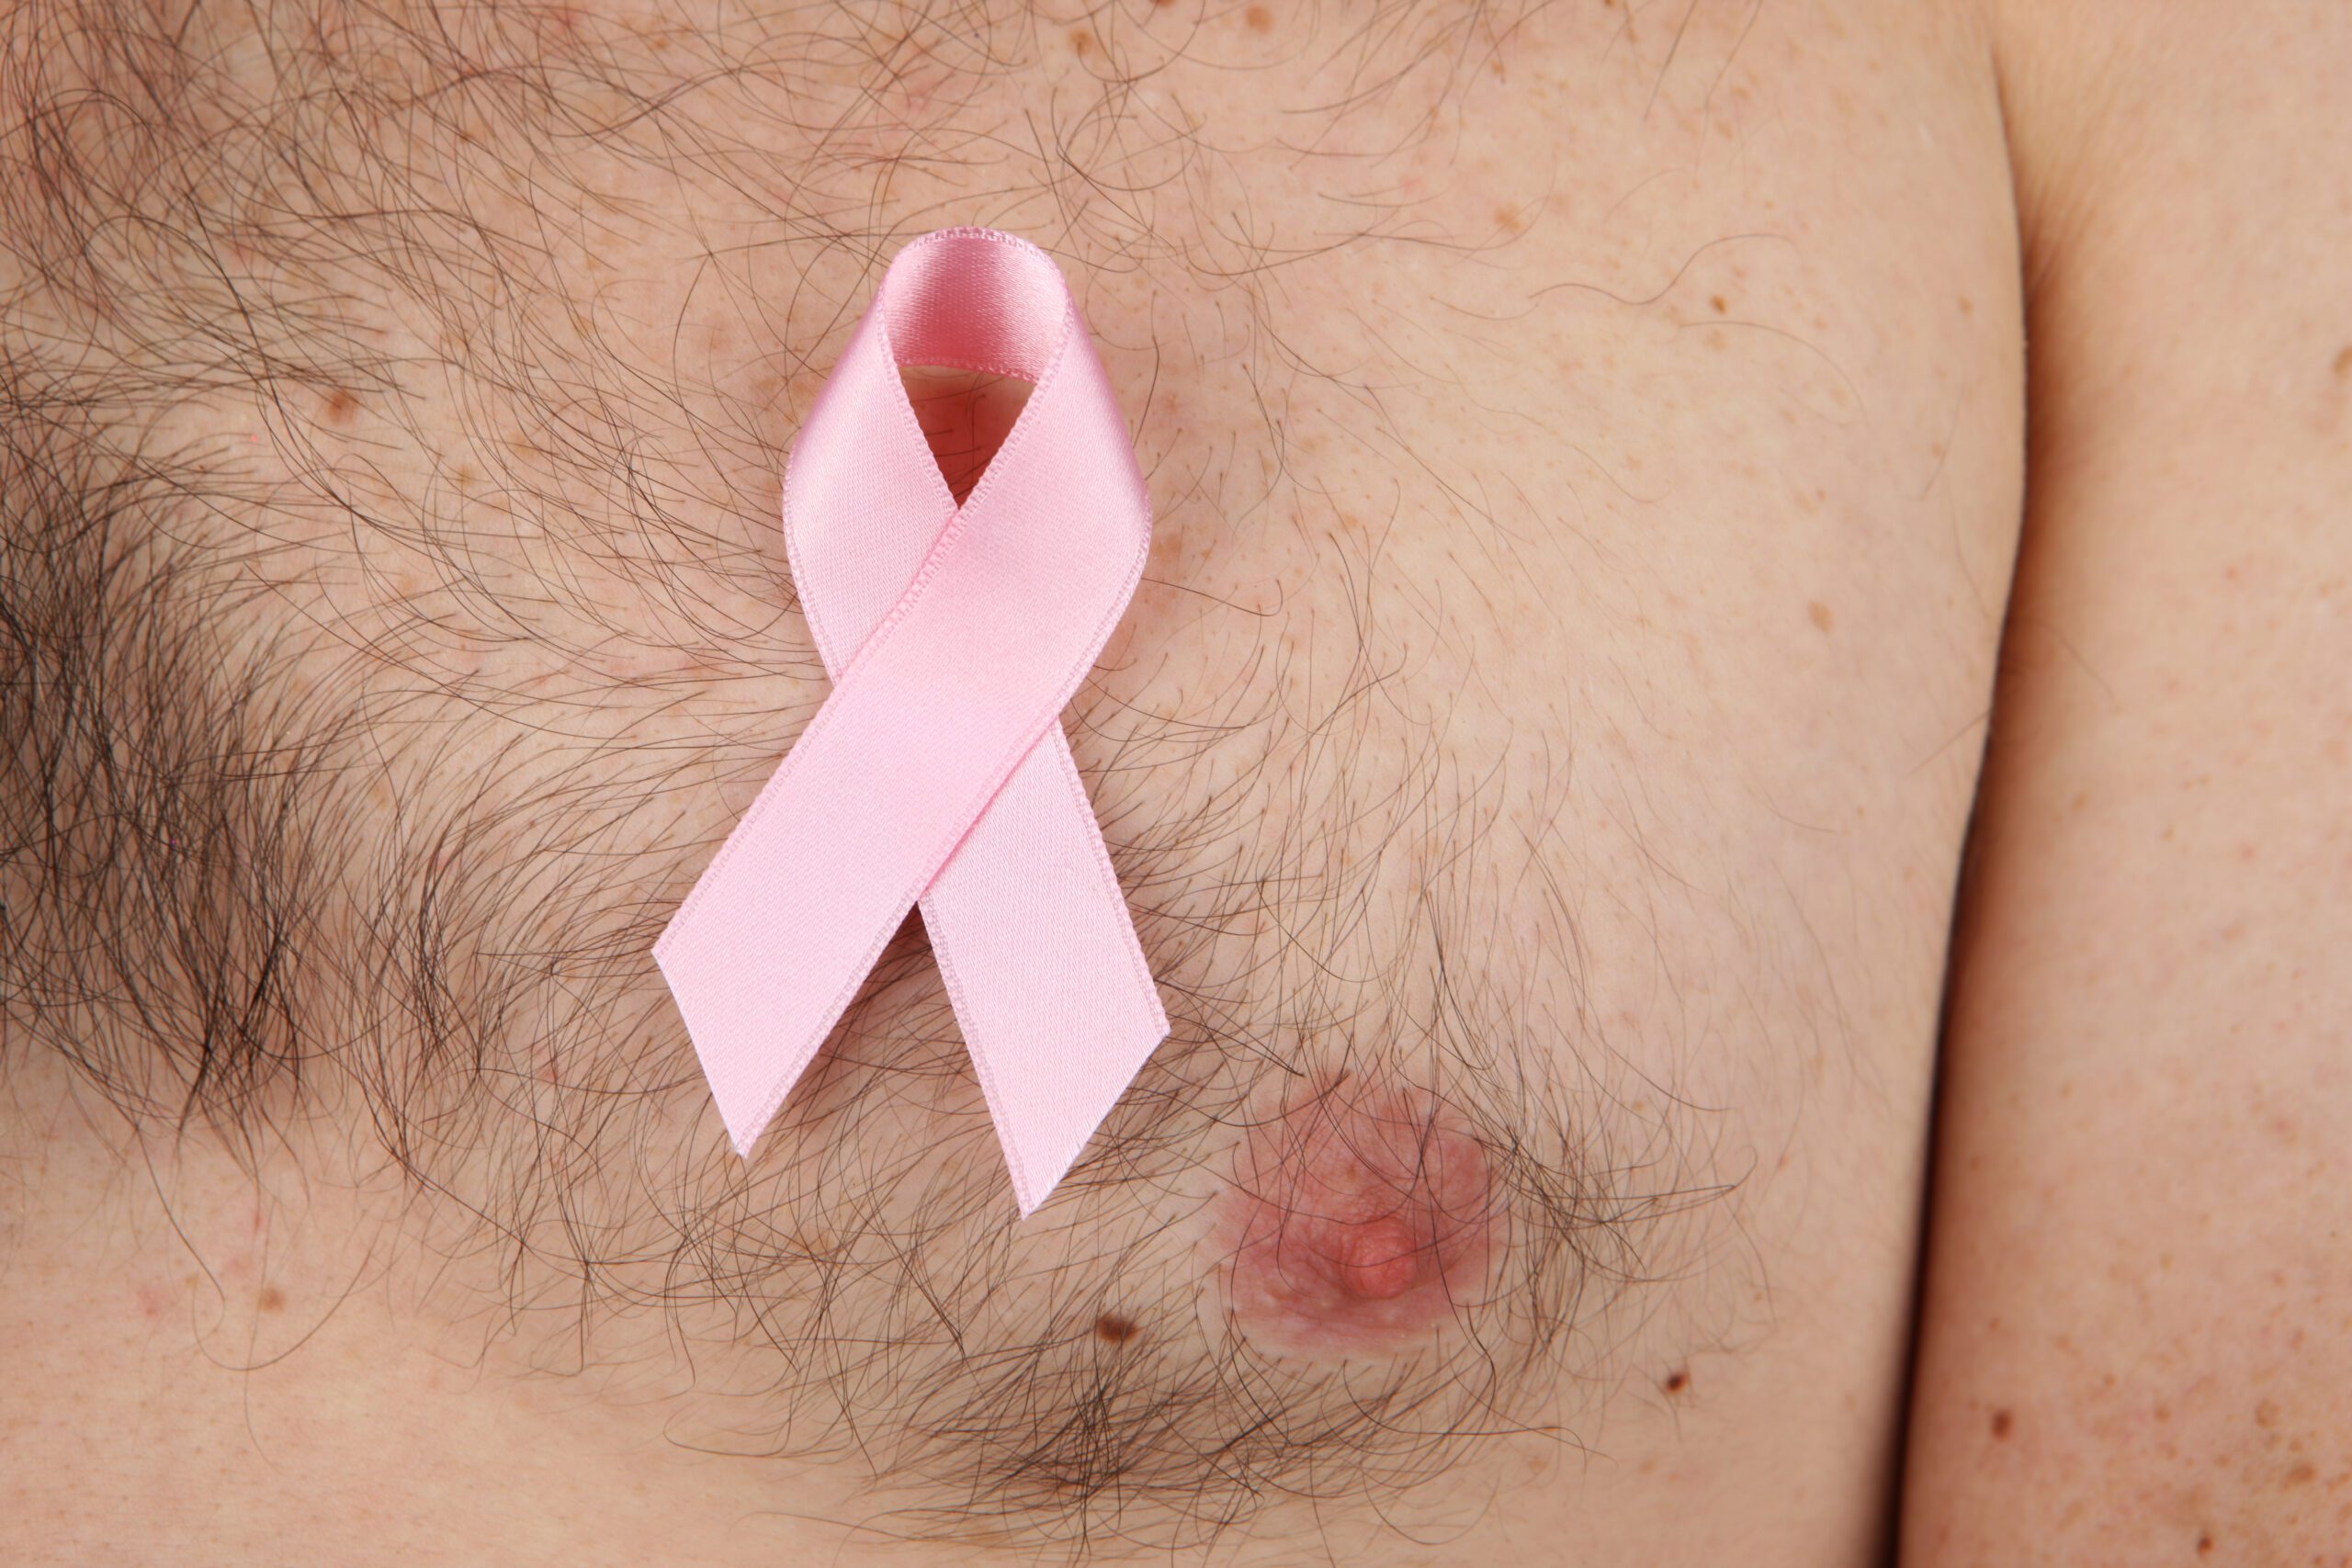 Men Aren’t Immune to Breast Cancer